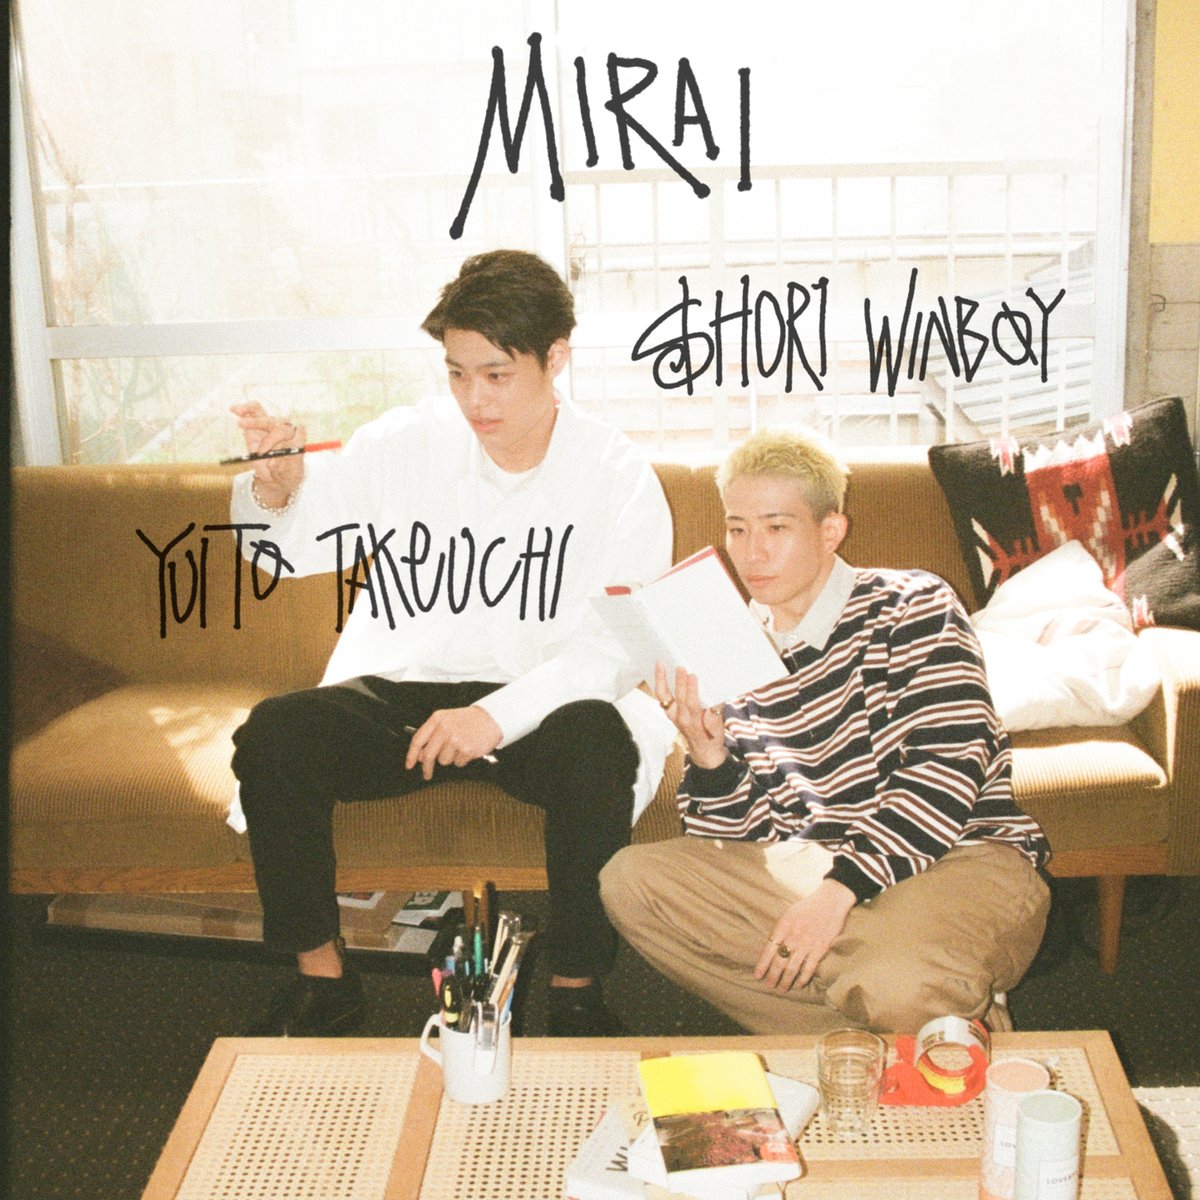 『竹内唯人 - MIRAI (feat. $HOR1 WINBOY)』収録の『MIRAI (feat. $HOR1 WINBOY)』ジャケット